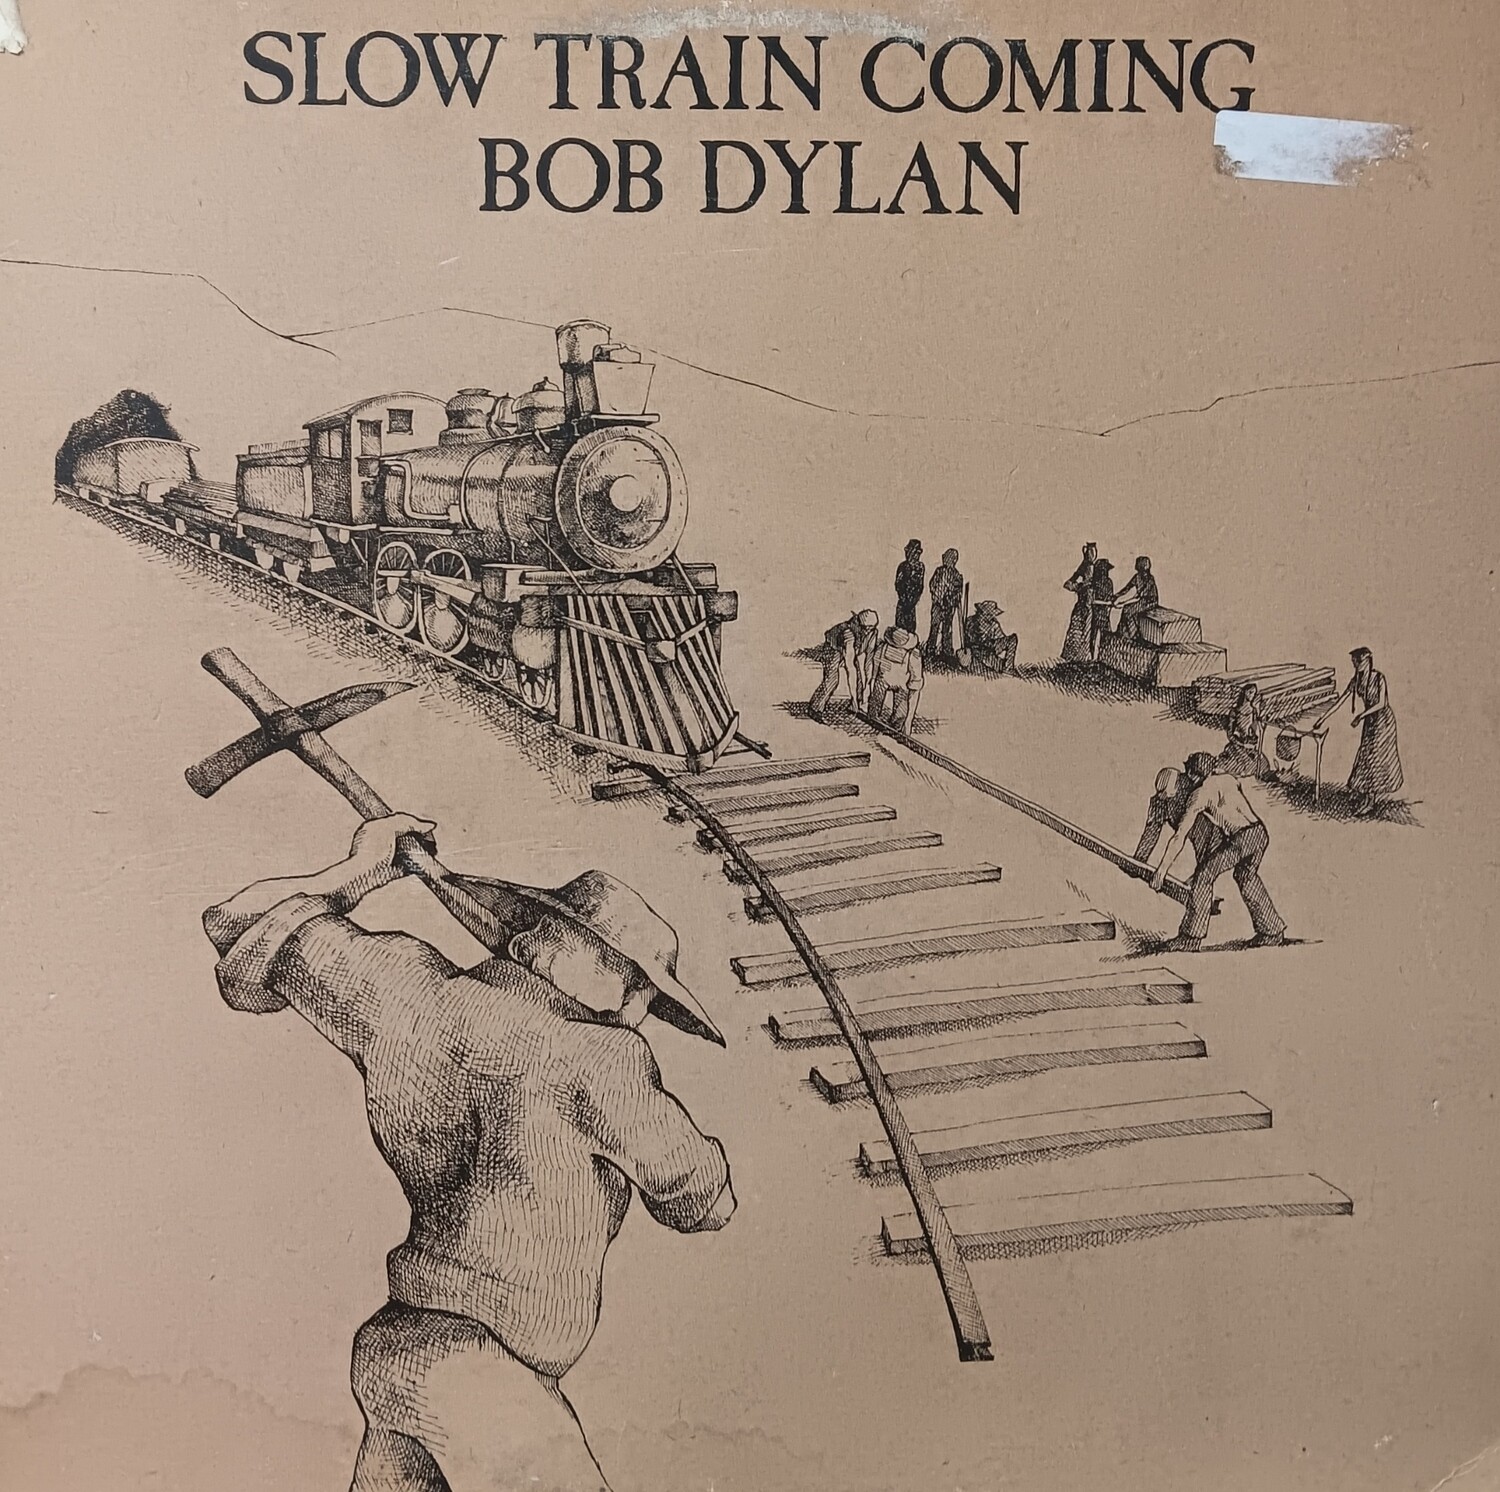 BOB DYLAN - Slow train coming